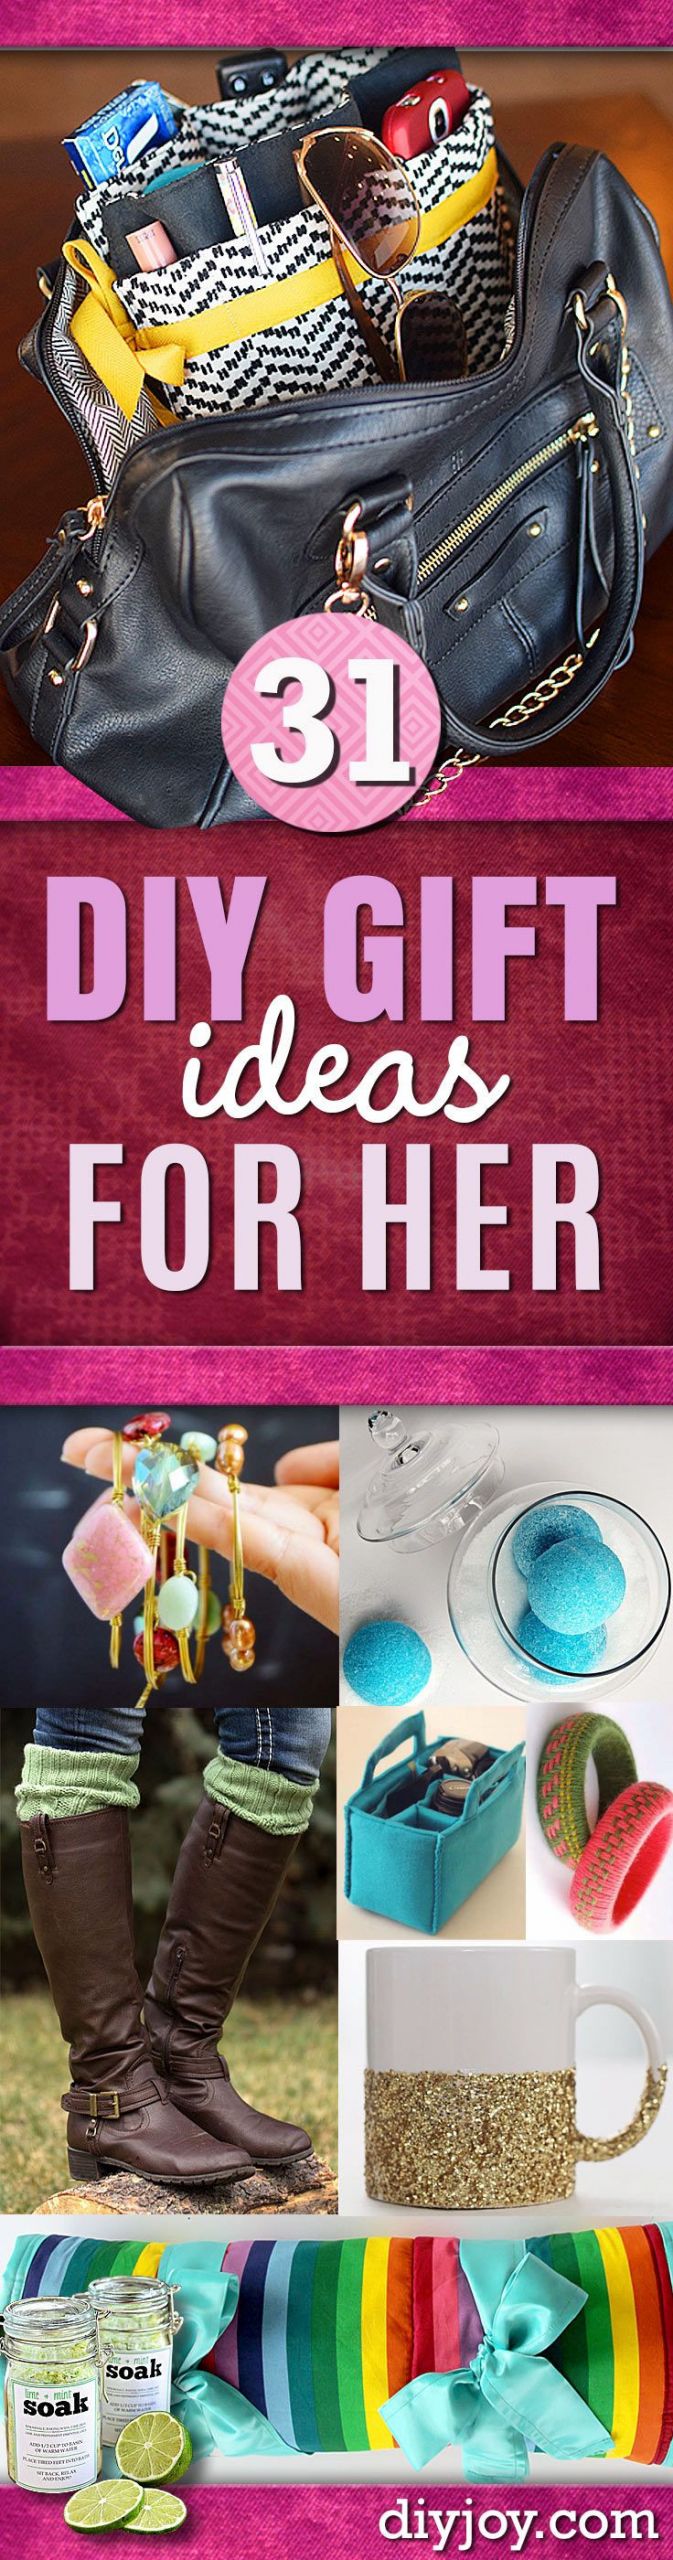 Gift Ideas For Girlfriend Pinterest
 Super Special DIY Gift Ideas for Her DIY JOY